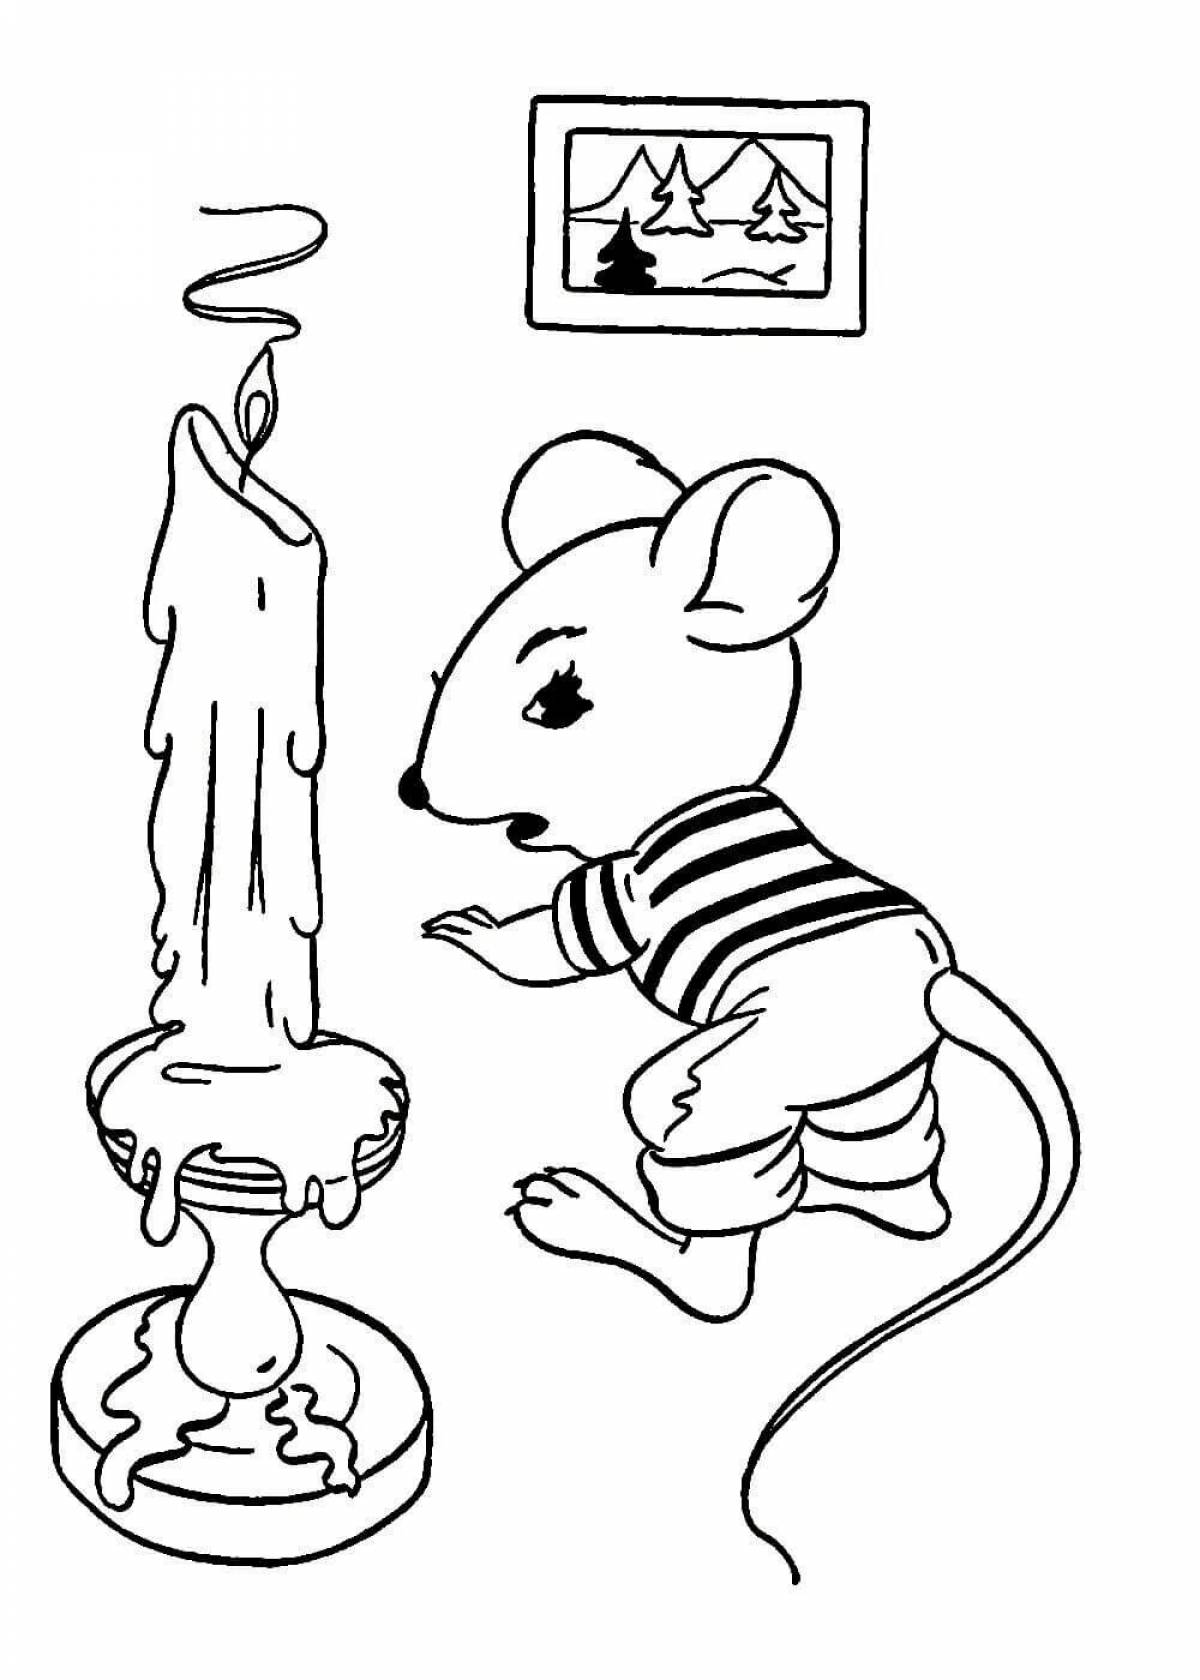 Элегантная раскраска тупого мышонка